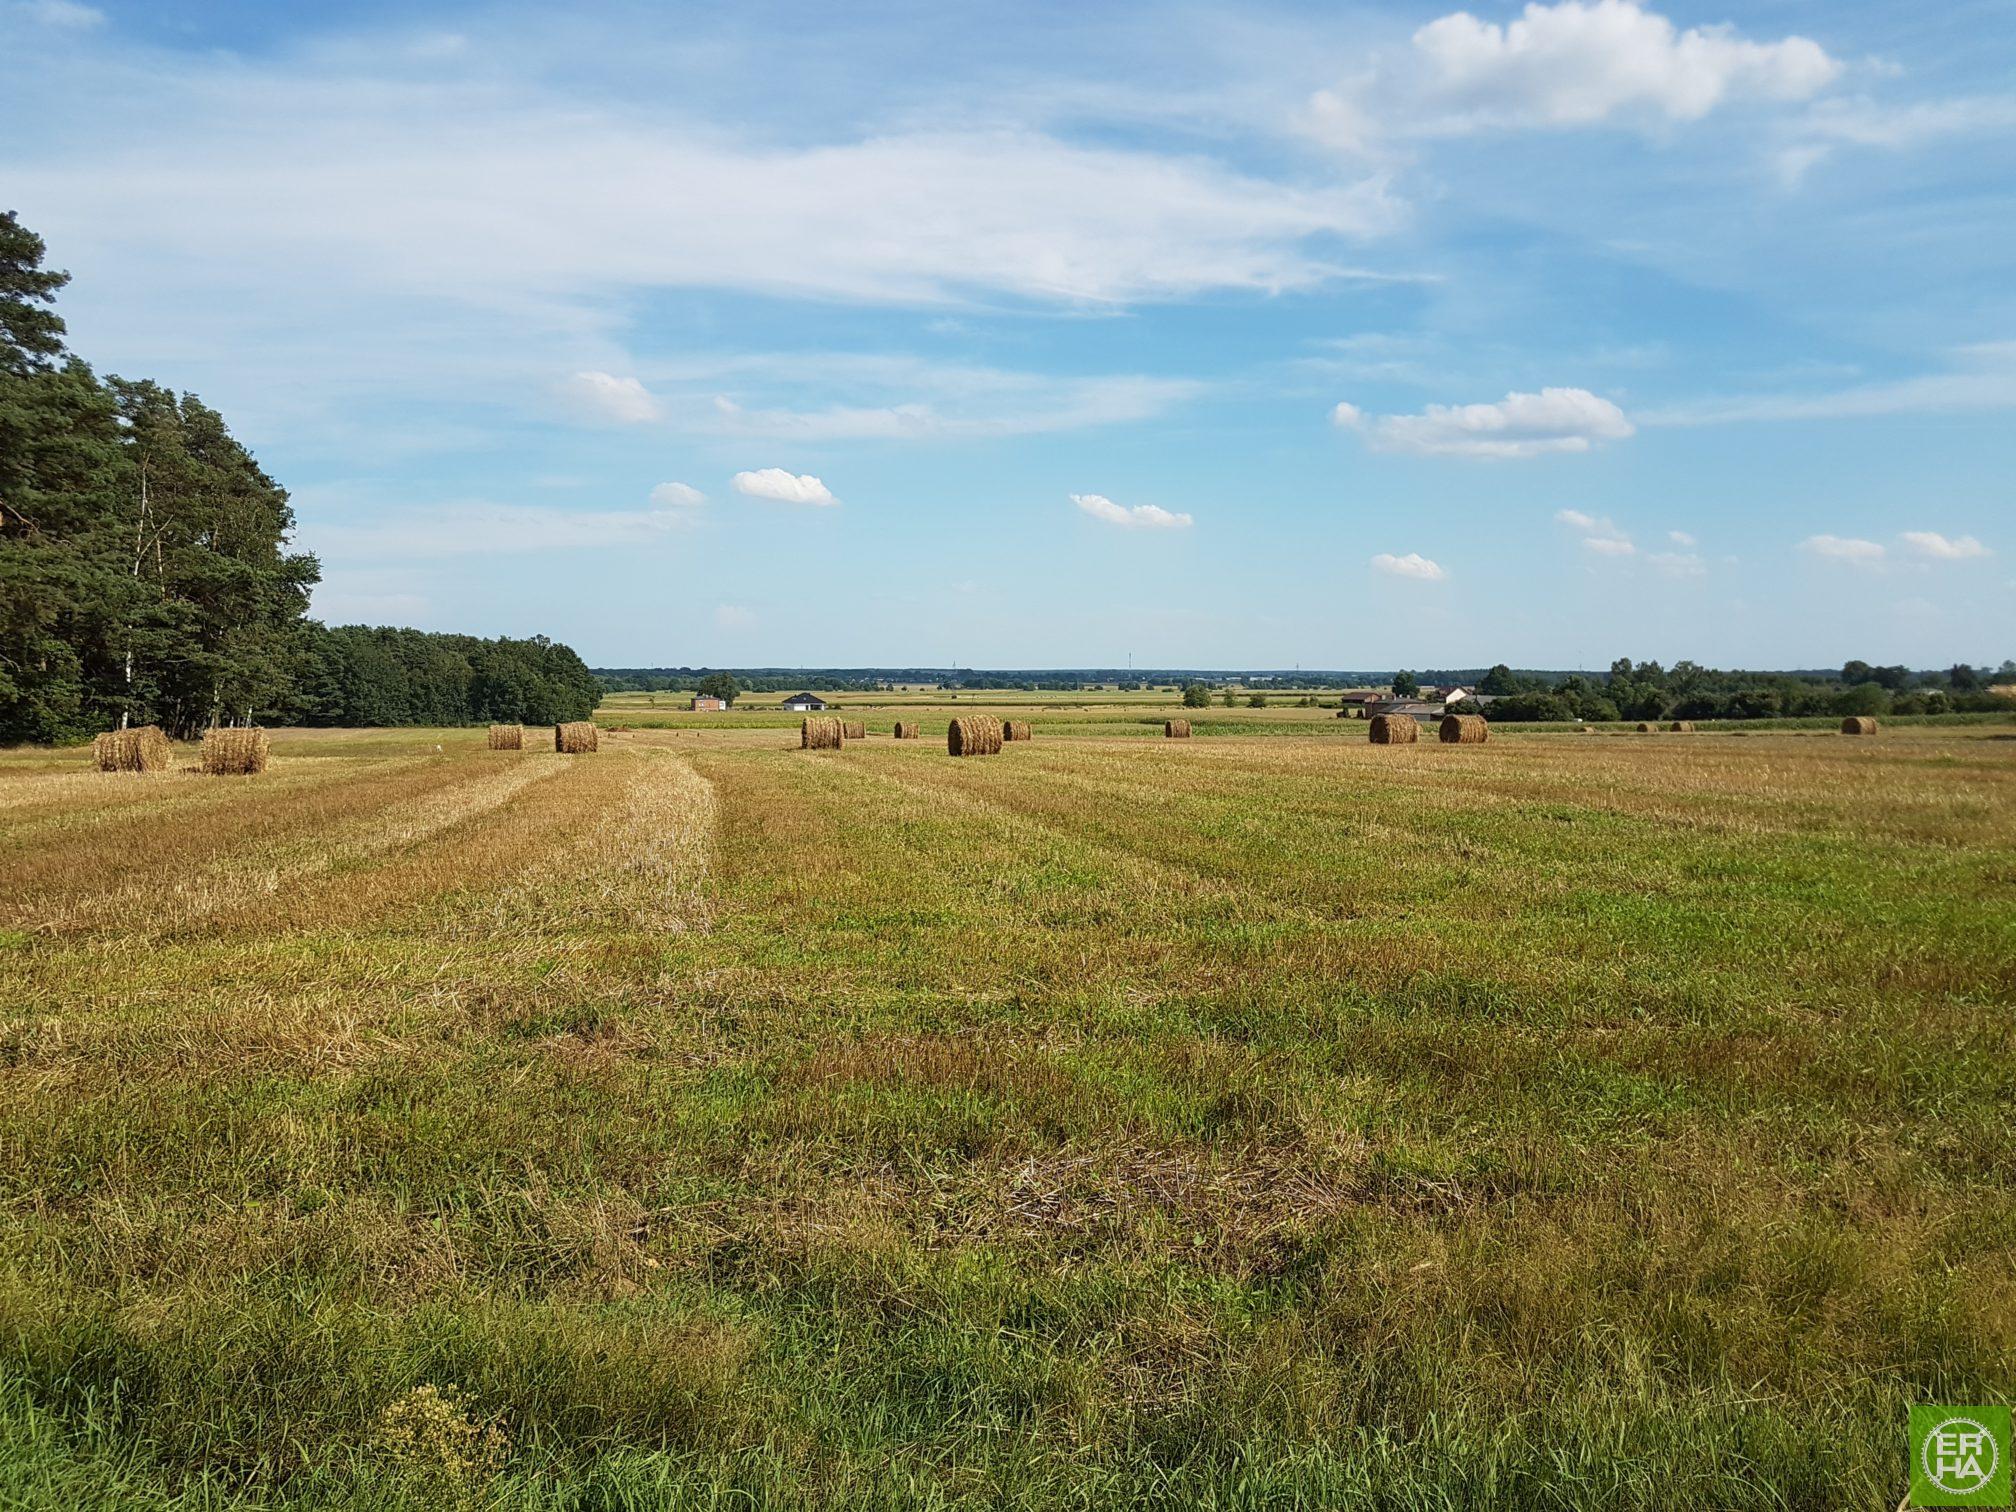 Szlak osad młyńskich i ekofarm nad Grabią - Pętla Środkowa - Pleszyn widok na pola